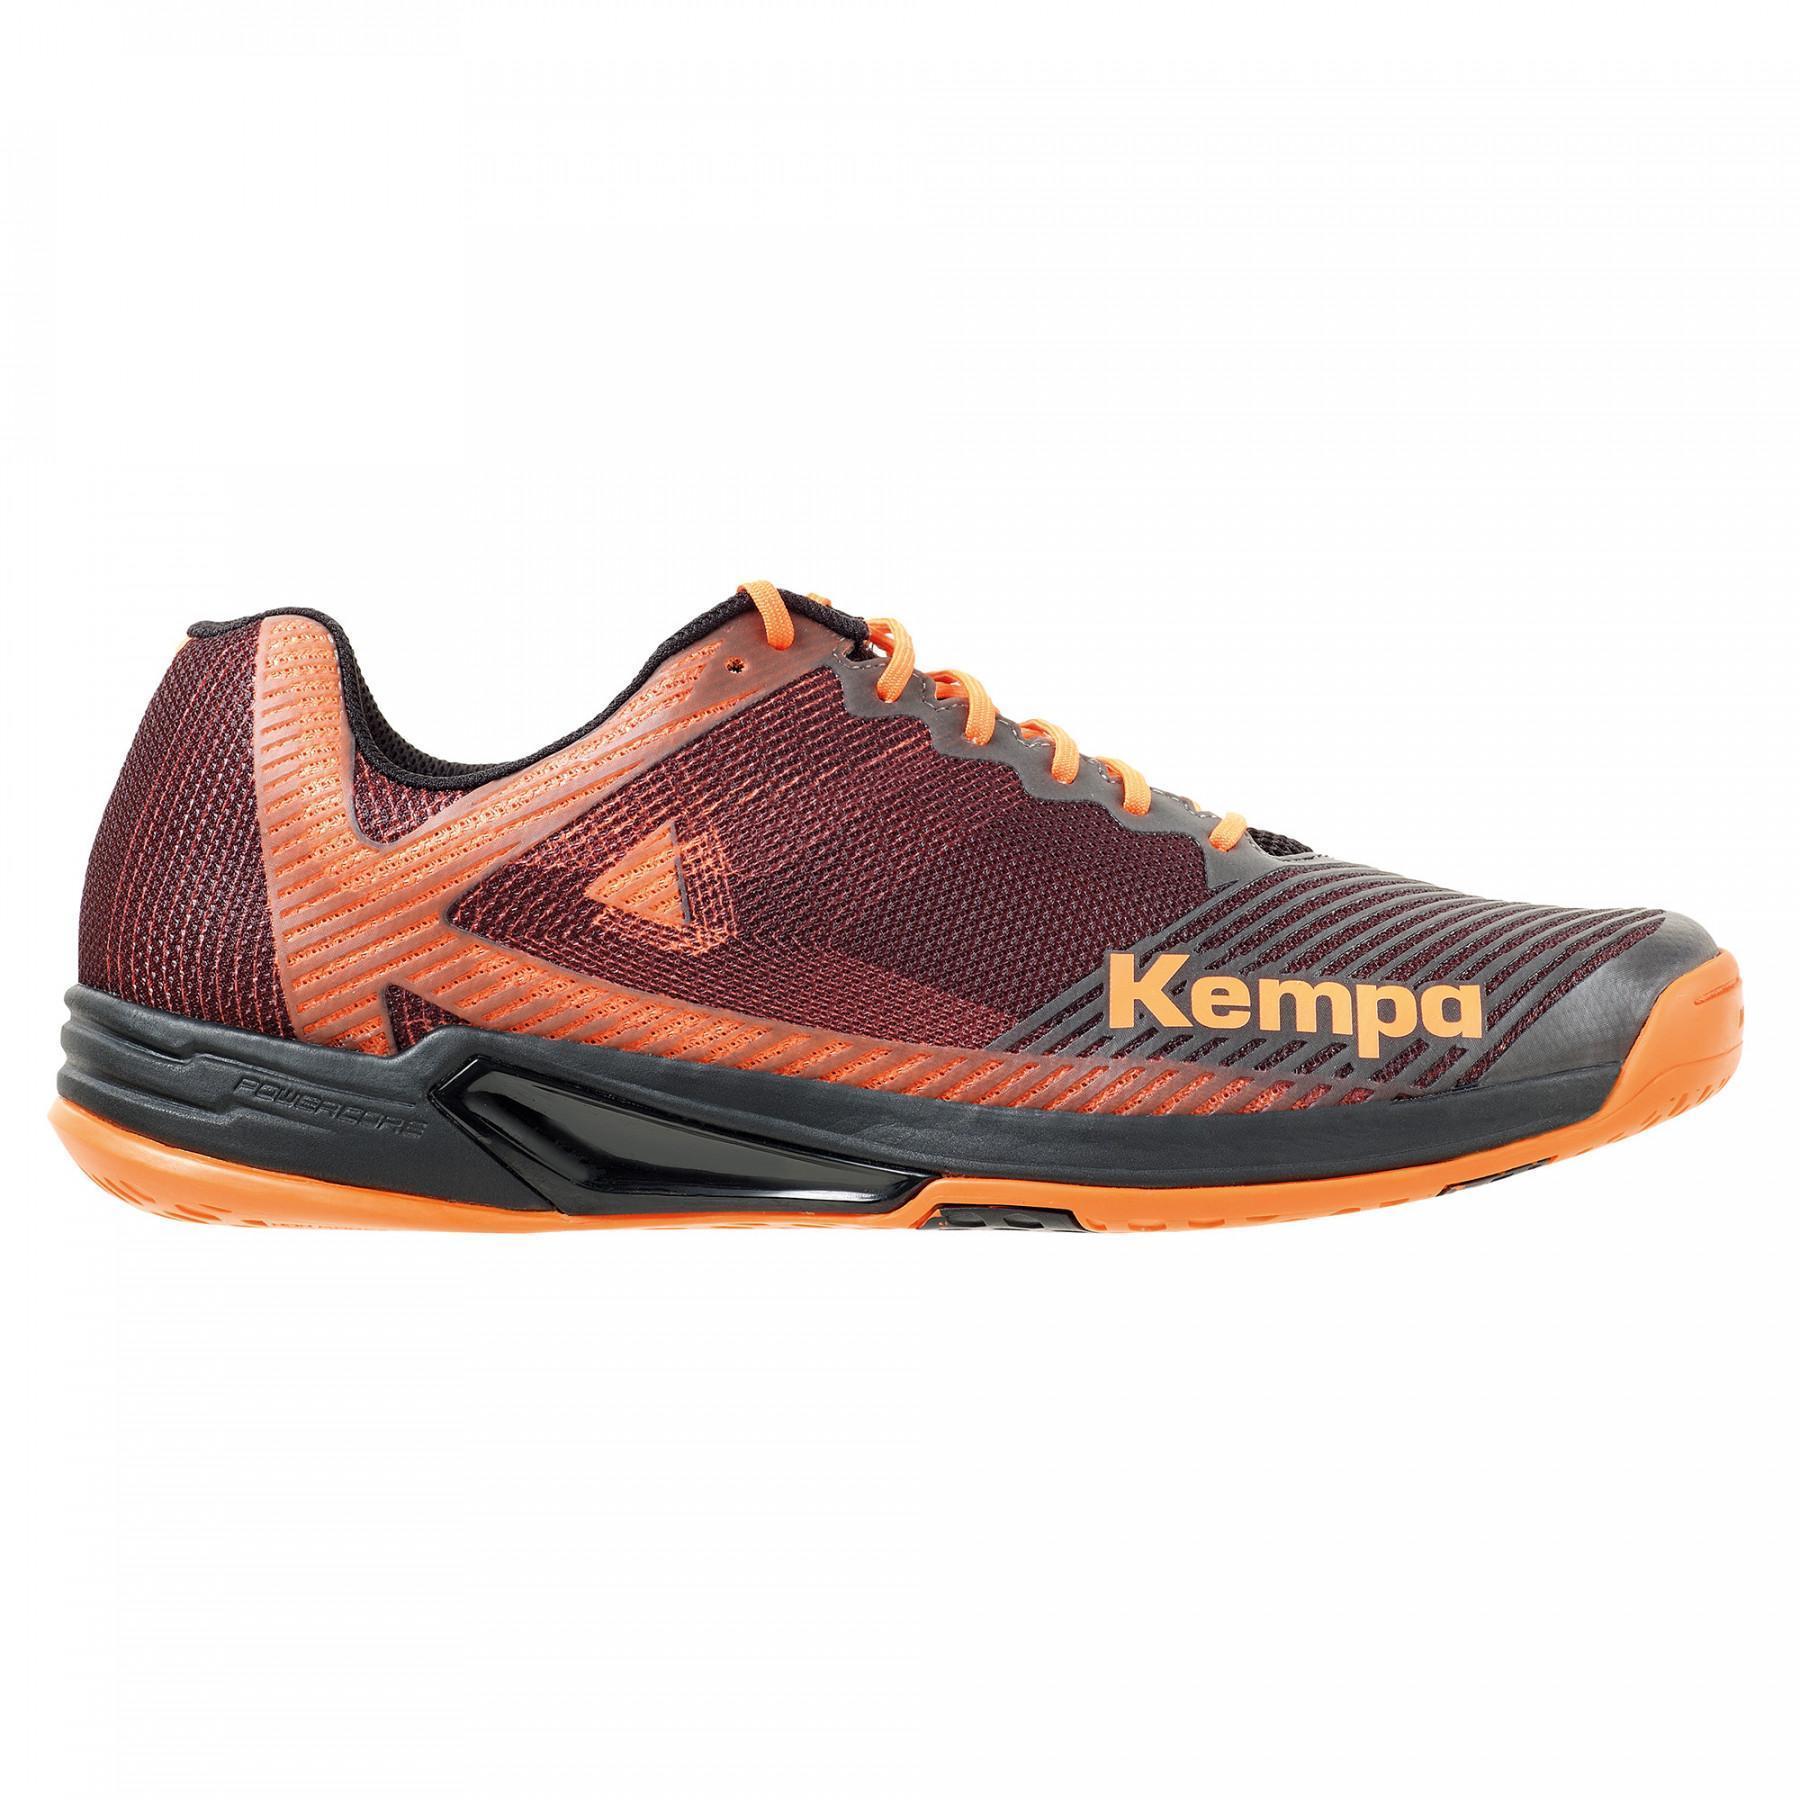 Shoes Kempa Wing 2.0